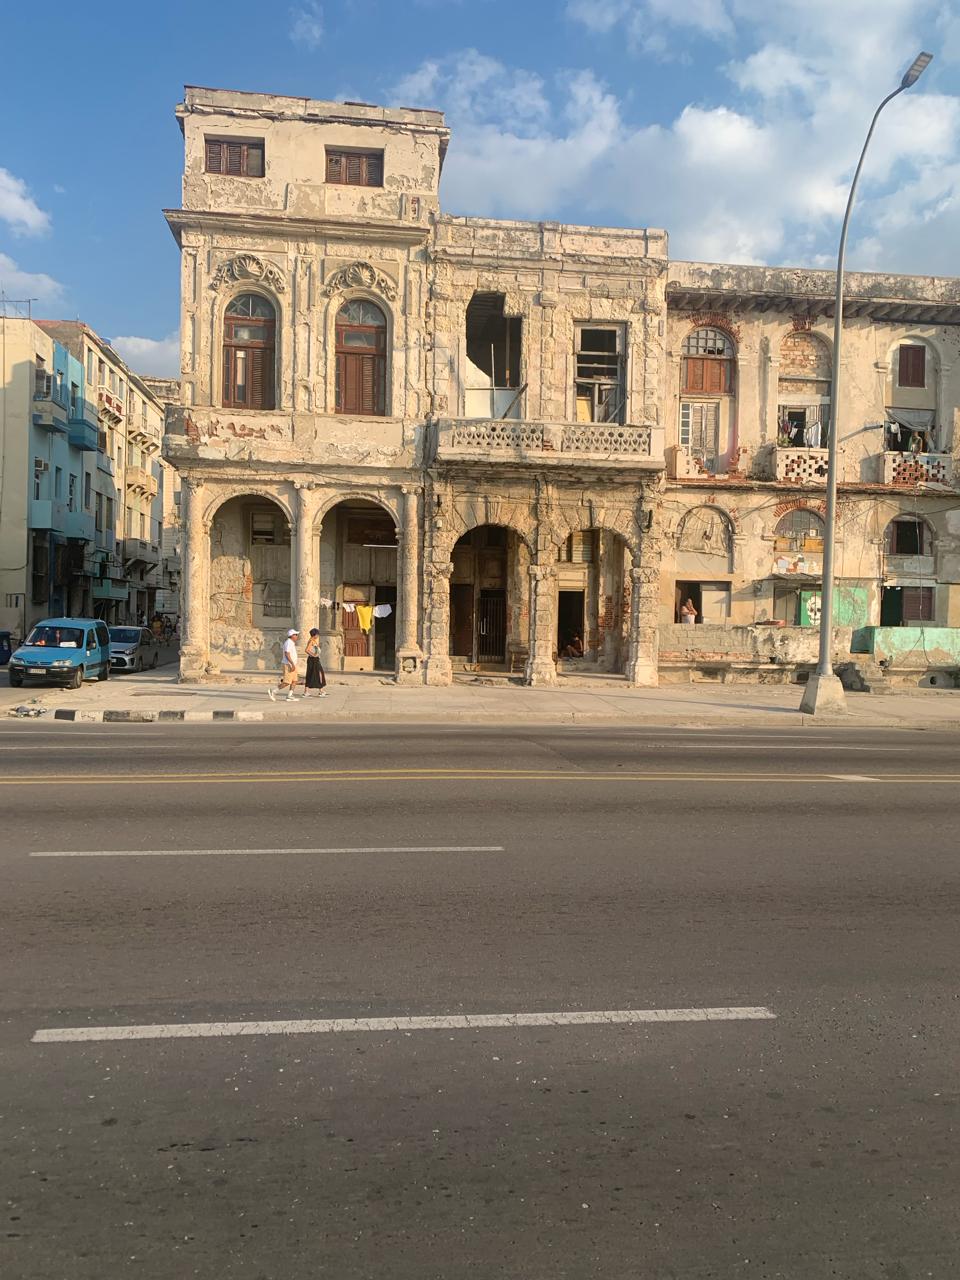 Edificio de una calle cubana.